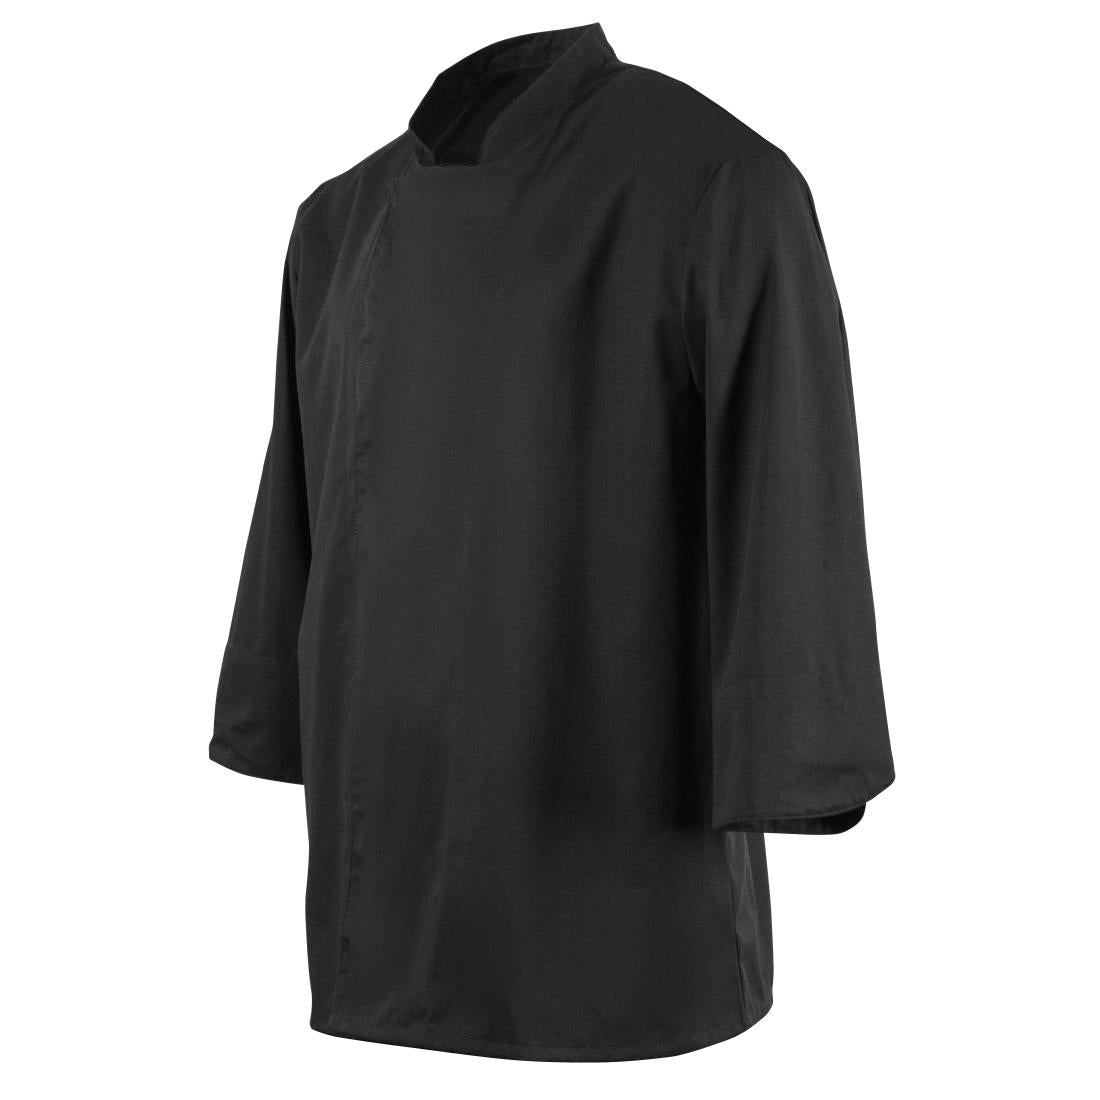 BB577-M Whites Unisex Atlanta Chef Jacket Black Teflon Size M JD Catering Equipment Solutions Ltd